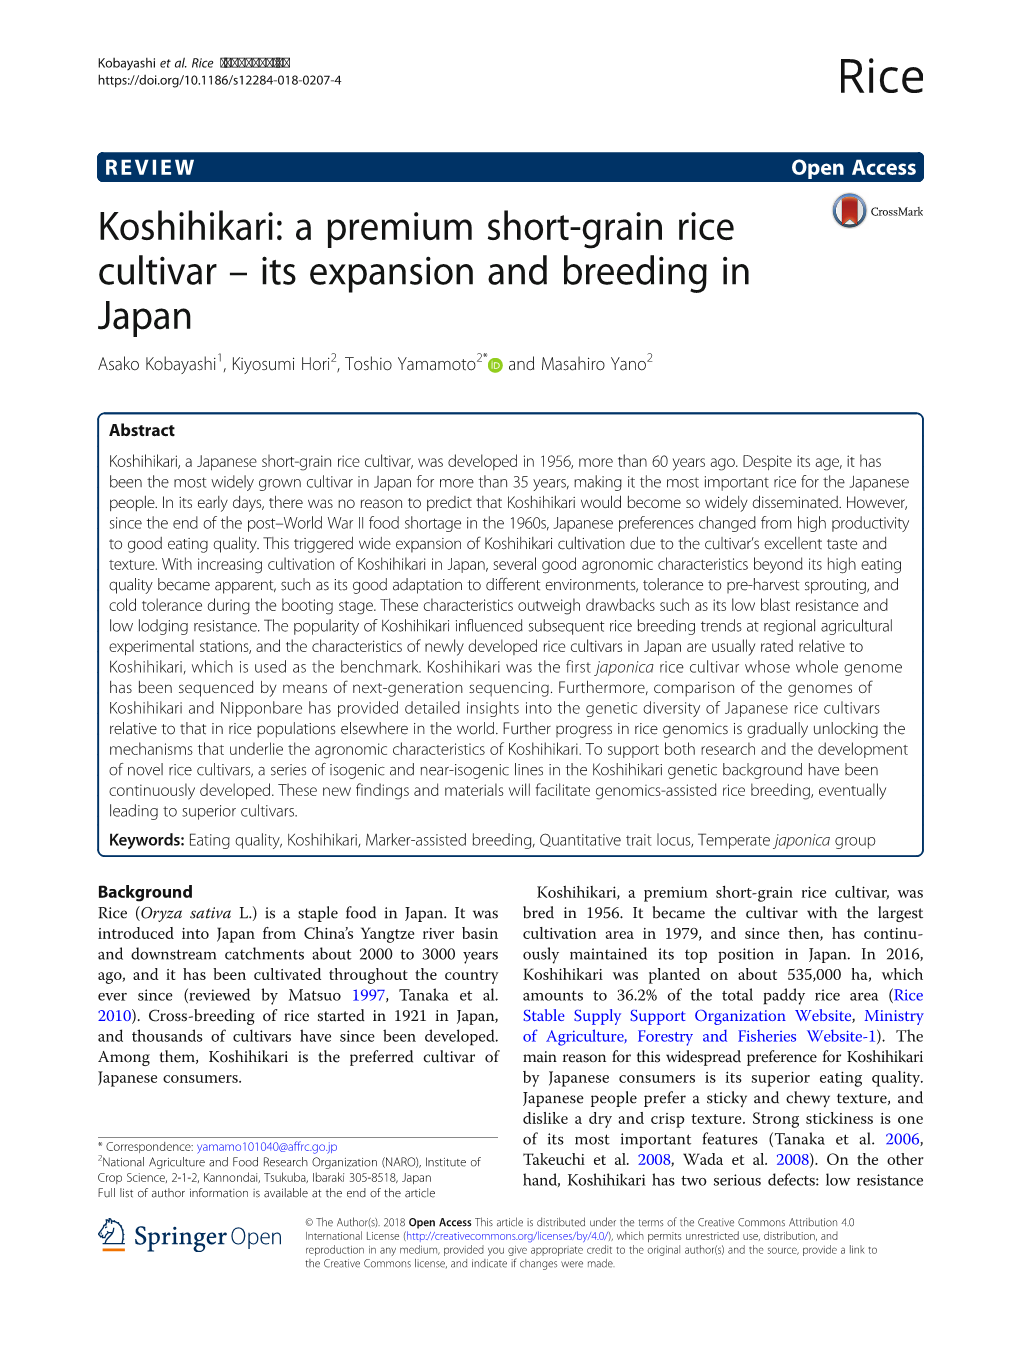 Koshihikari: a Premium Short-Grain Rice Cultivar – Its Expansion and Breeding in Japan Asako Kobayashi1, Kiyosumi Hori2, Toshio Yamamoto2* and Masahiro Yano2